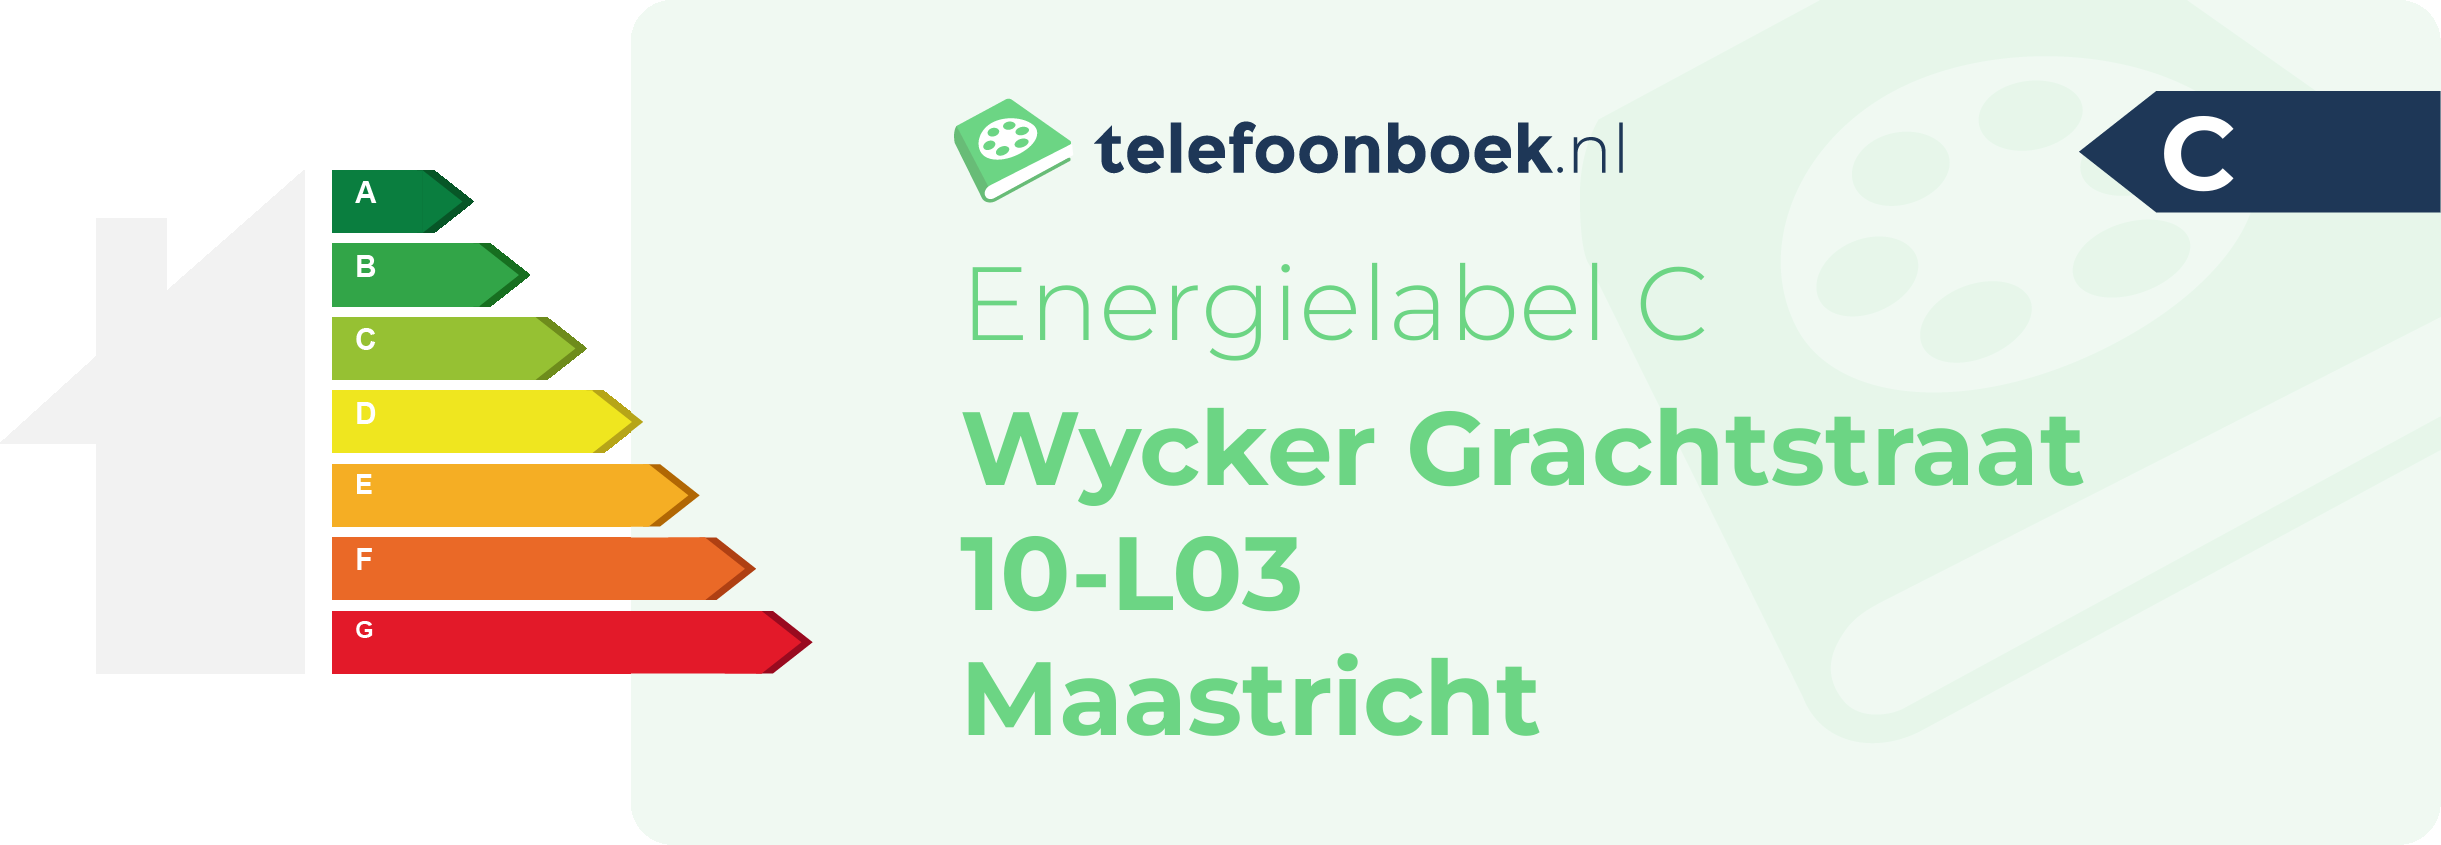 Energielabel Wycker Grachtstraat 10-L03 Maastricht